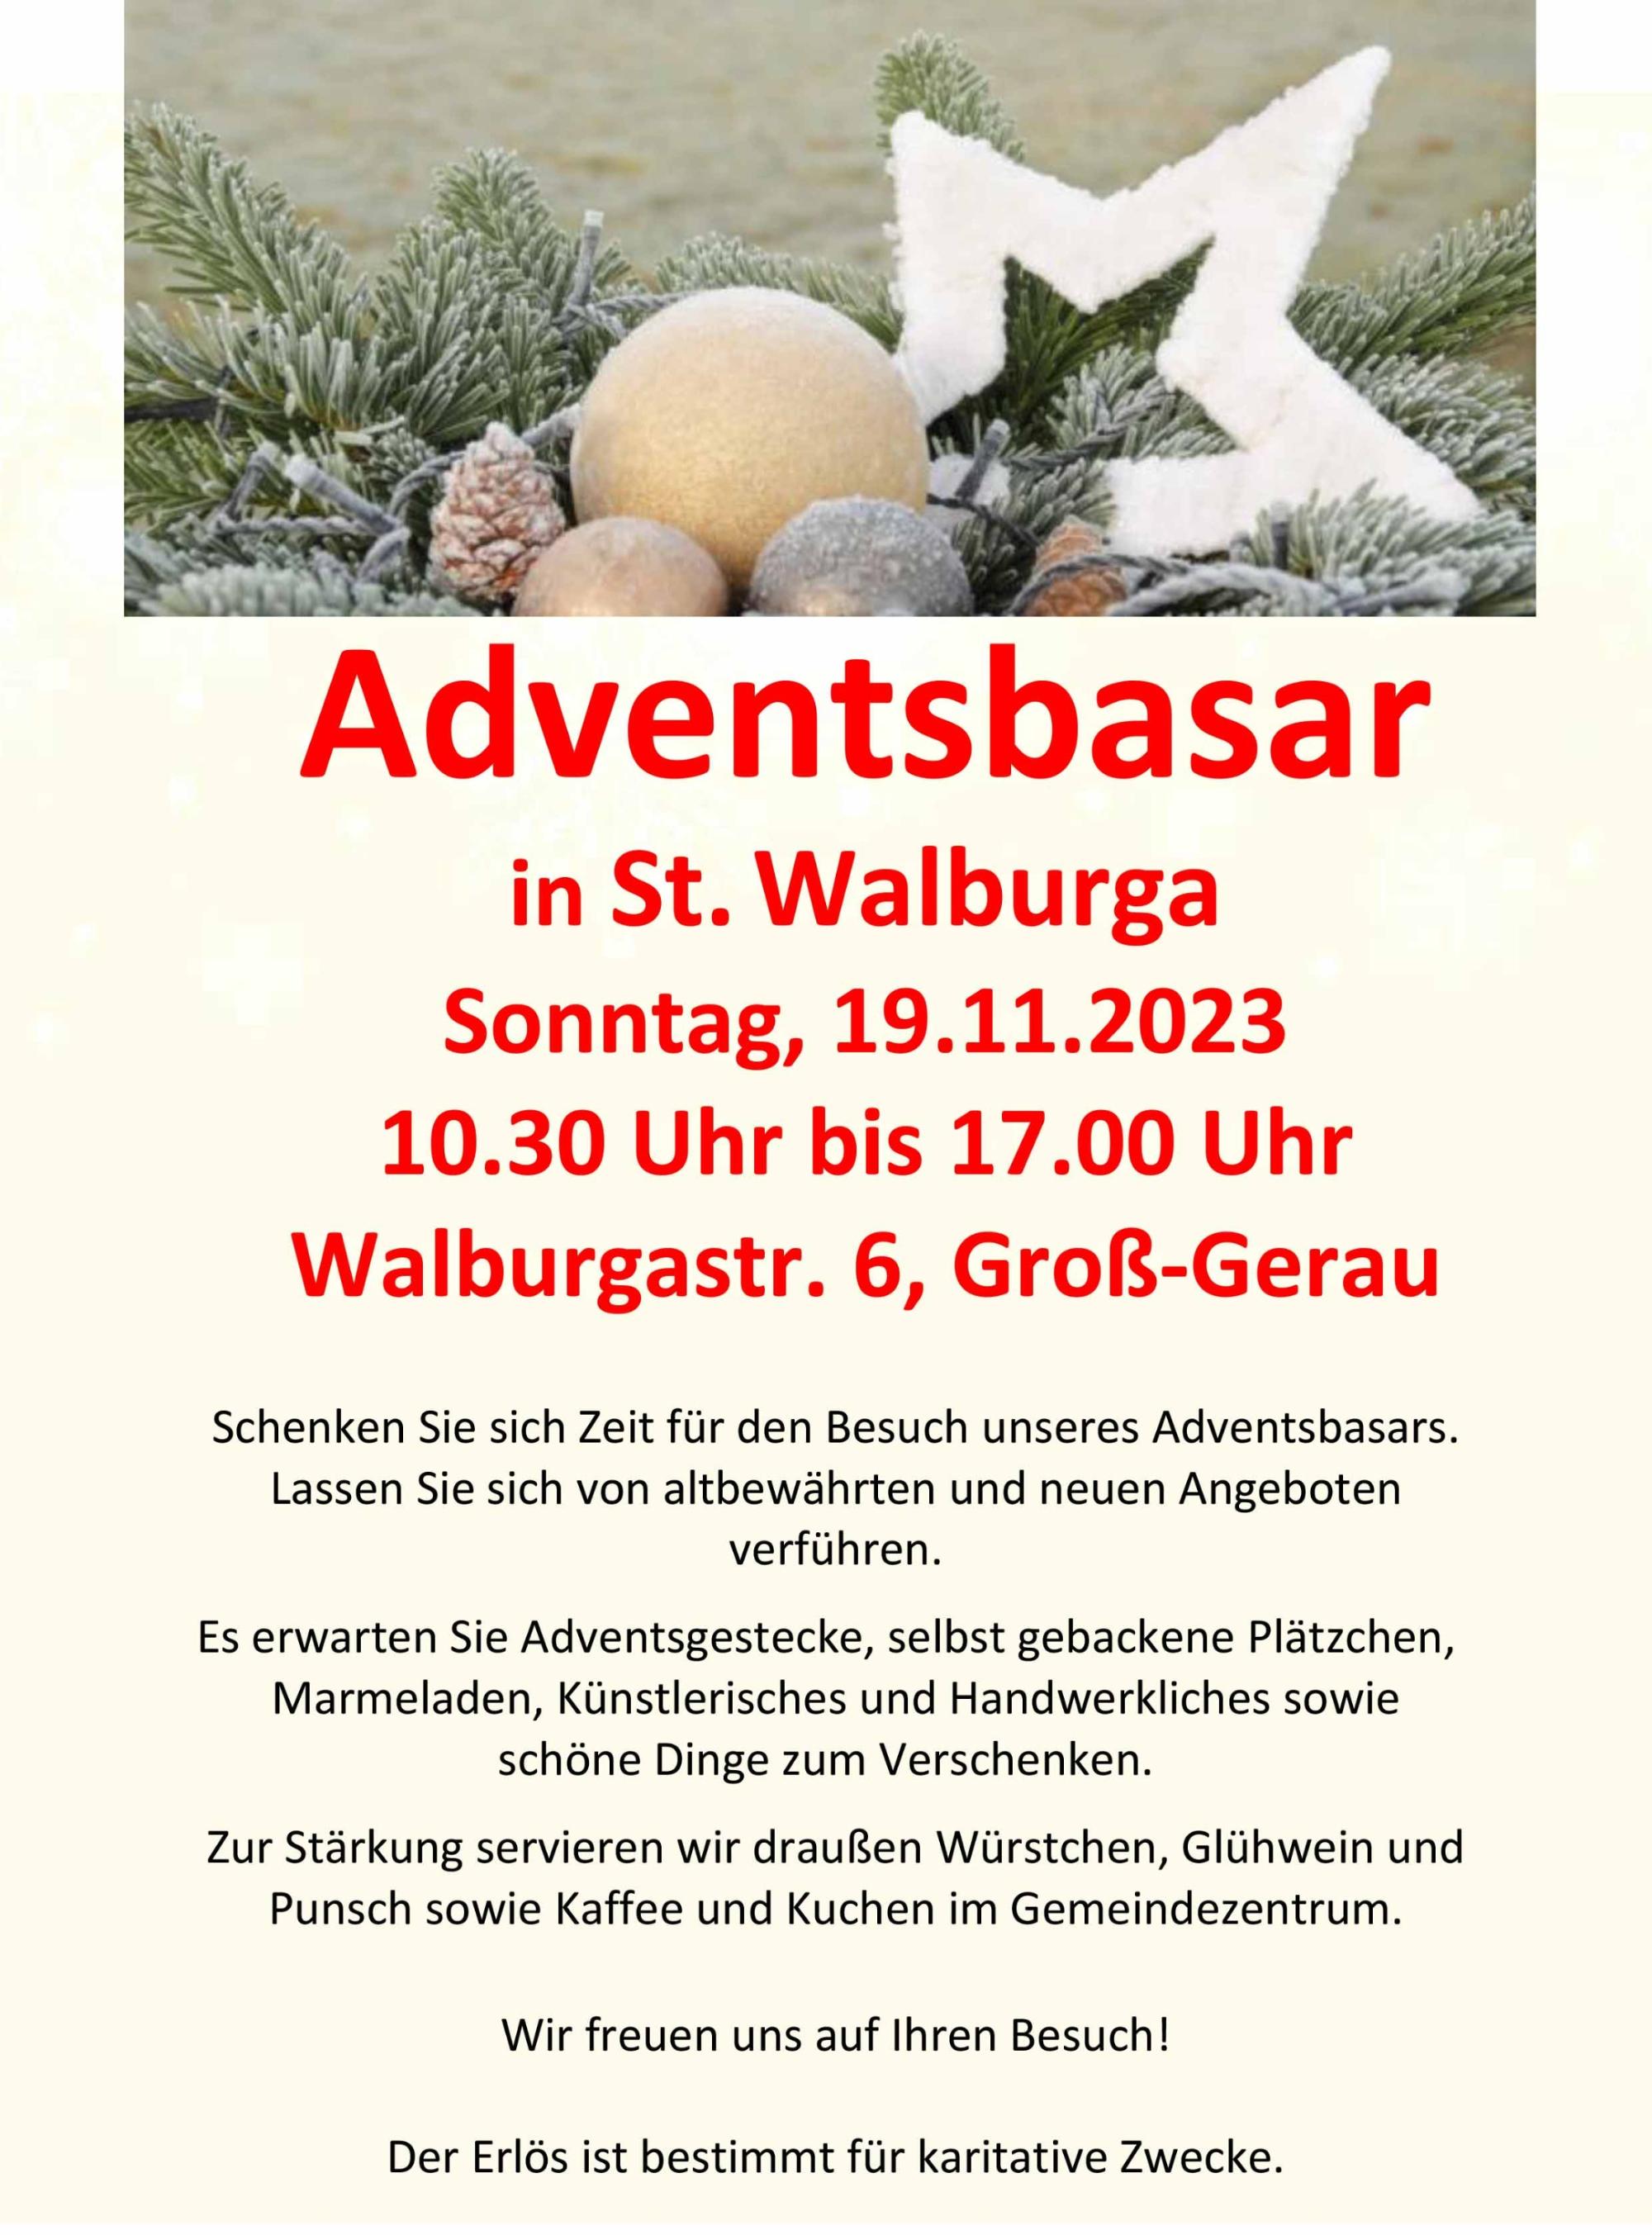 Plakat Adventsbasar 19.11.2023 Version 15.10.23